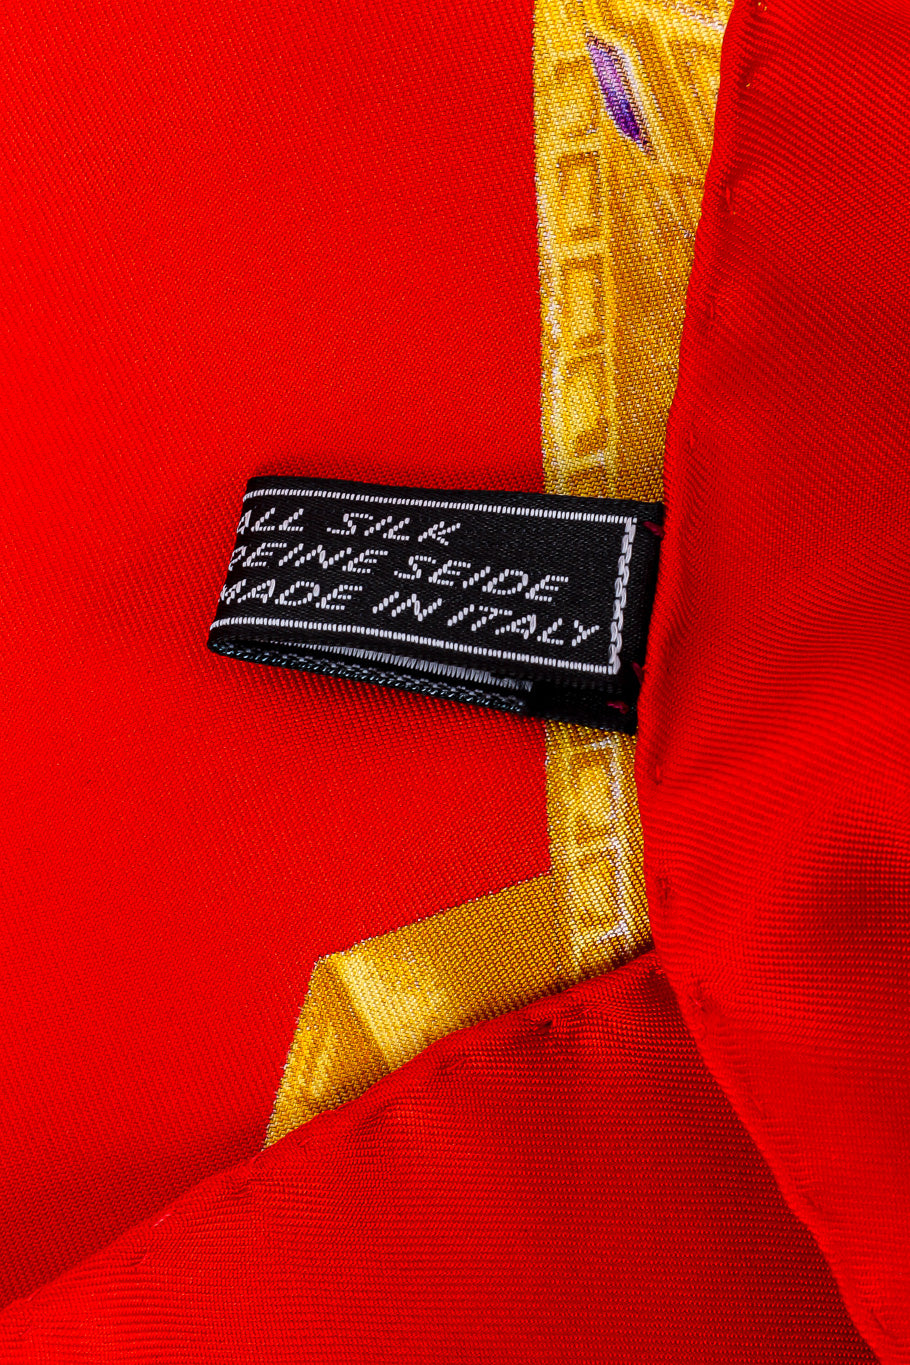 Gemstone silk scarf by Celine Photo of Fabric Details @recessla